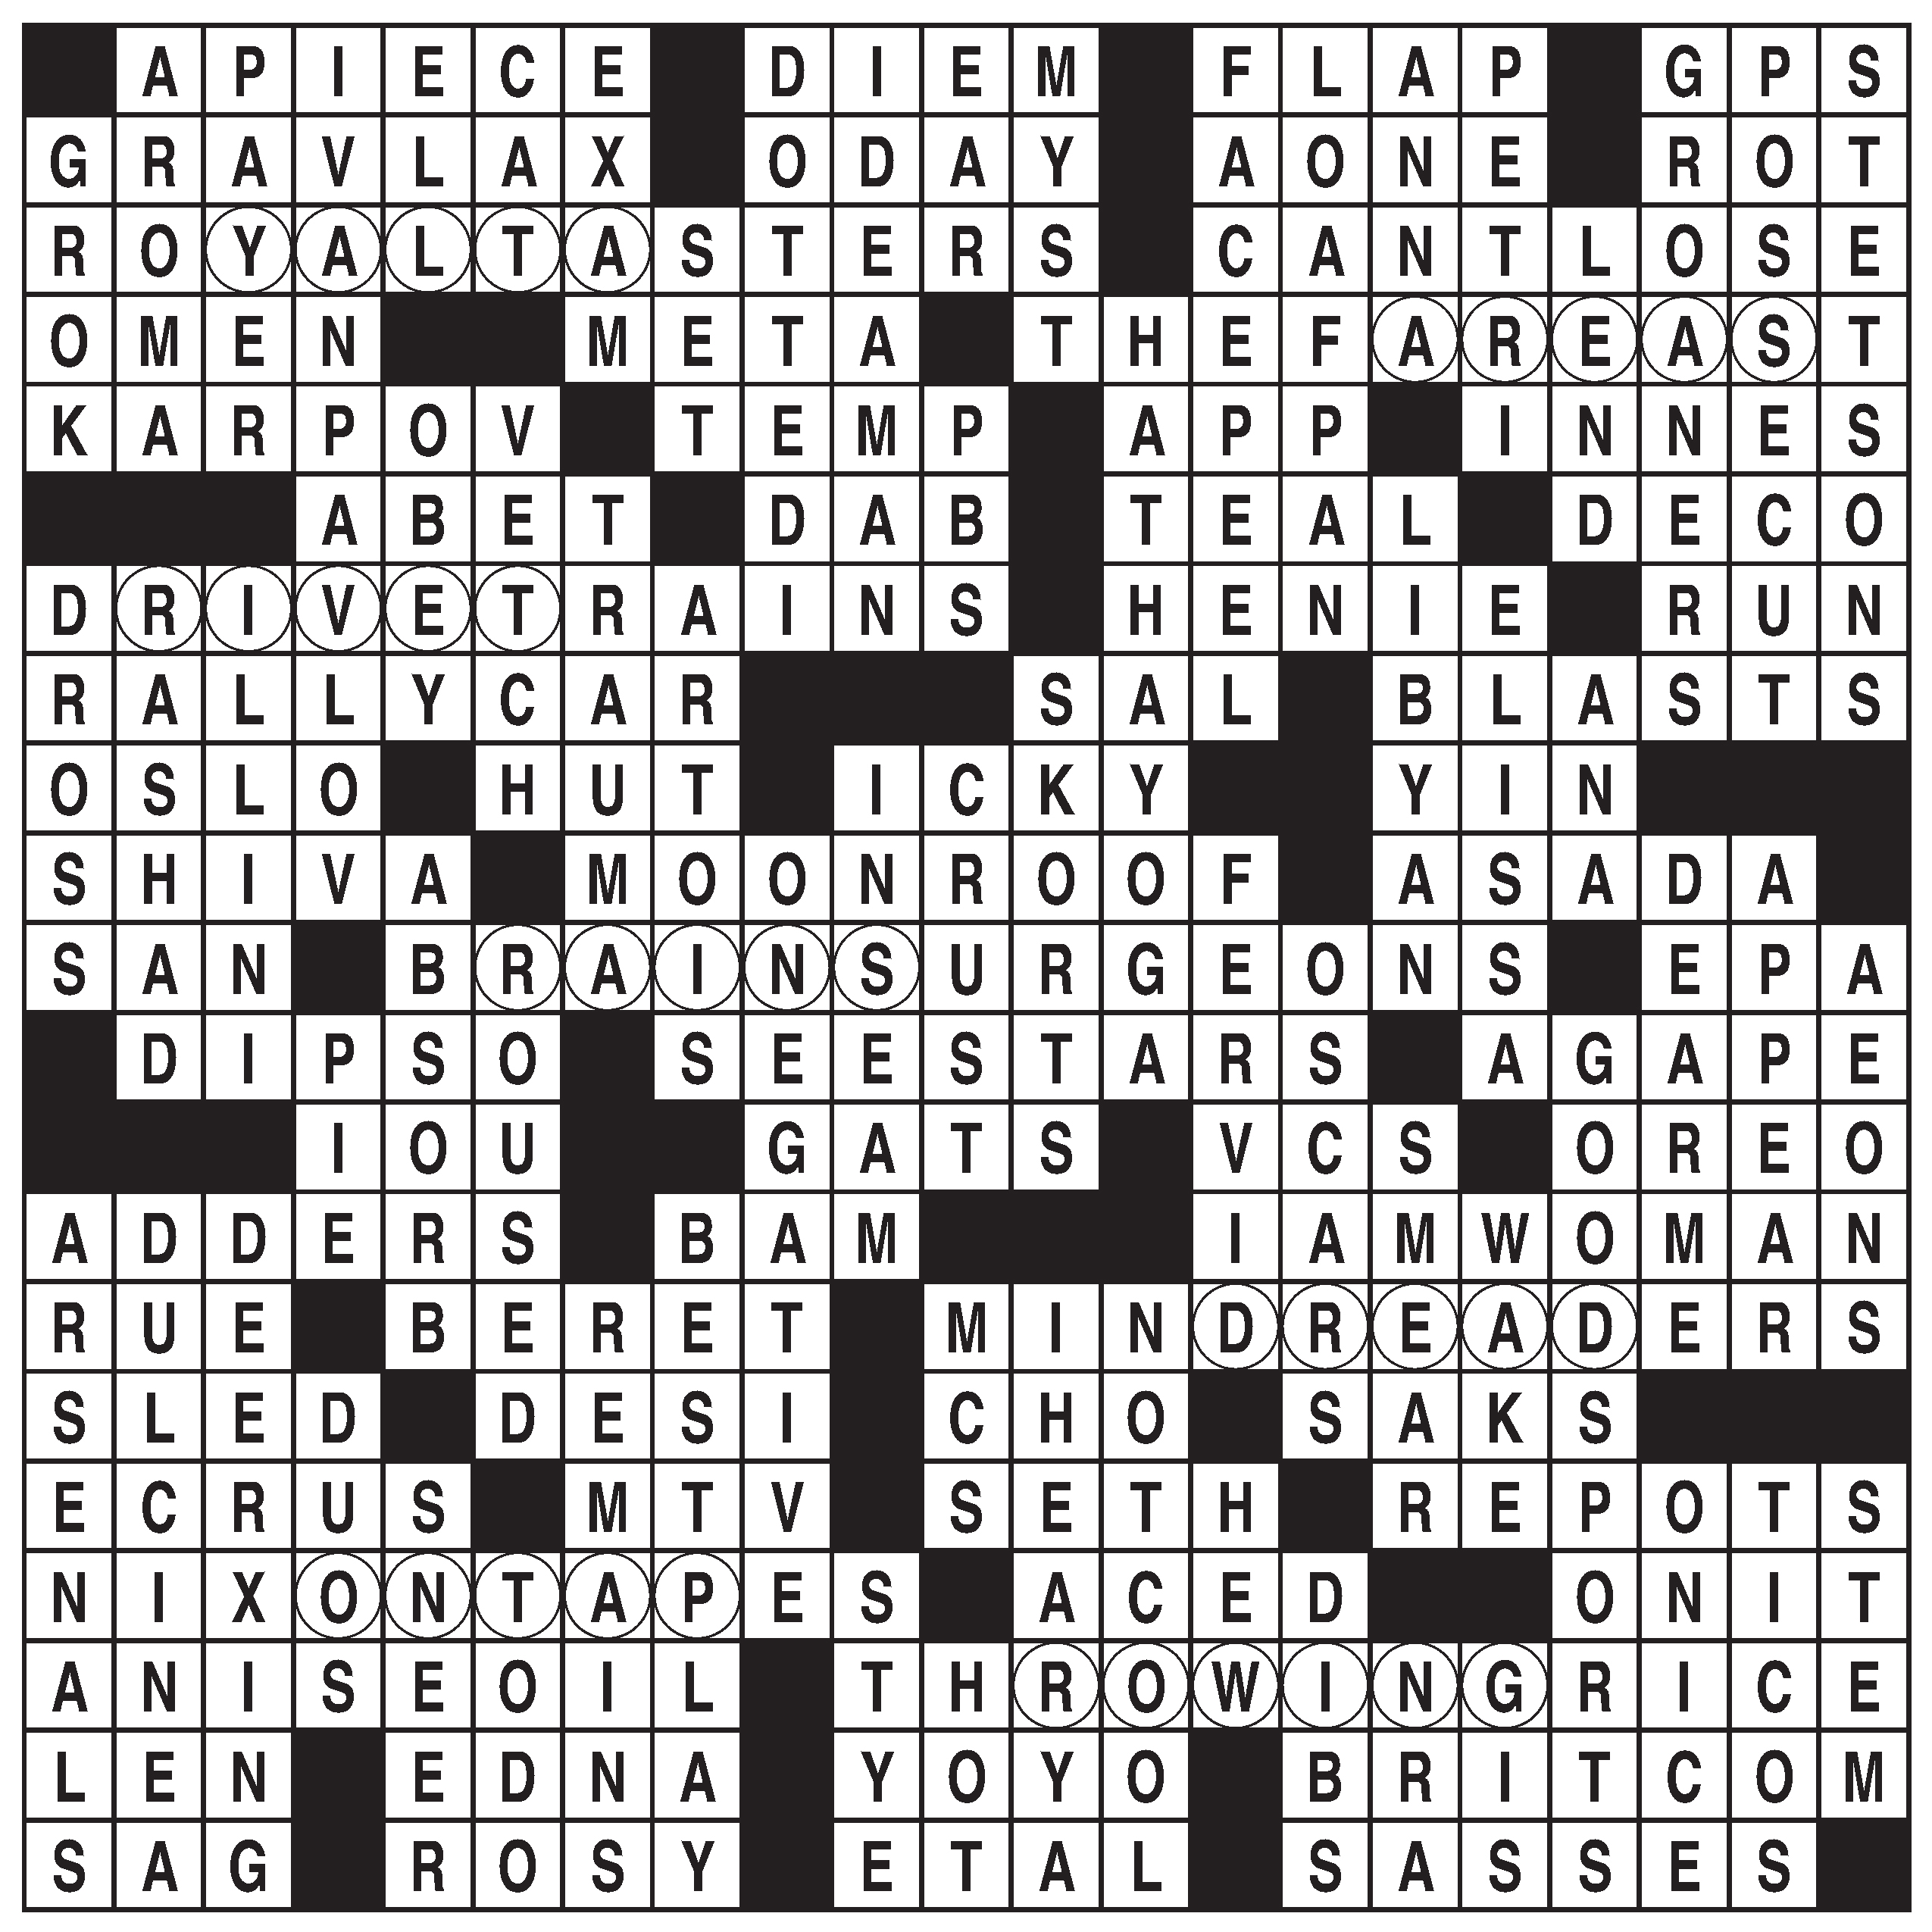 New York Times crossword answers for Dec. 3 | Fort Worth Star-Telegram